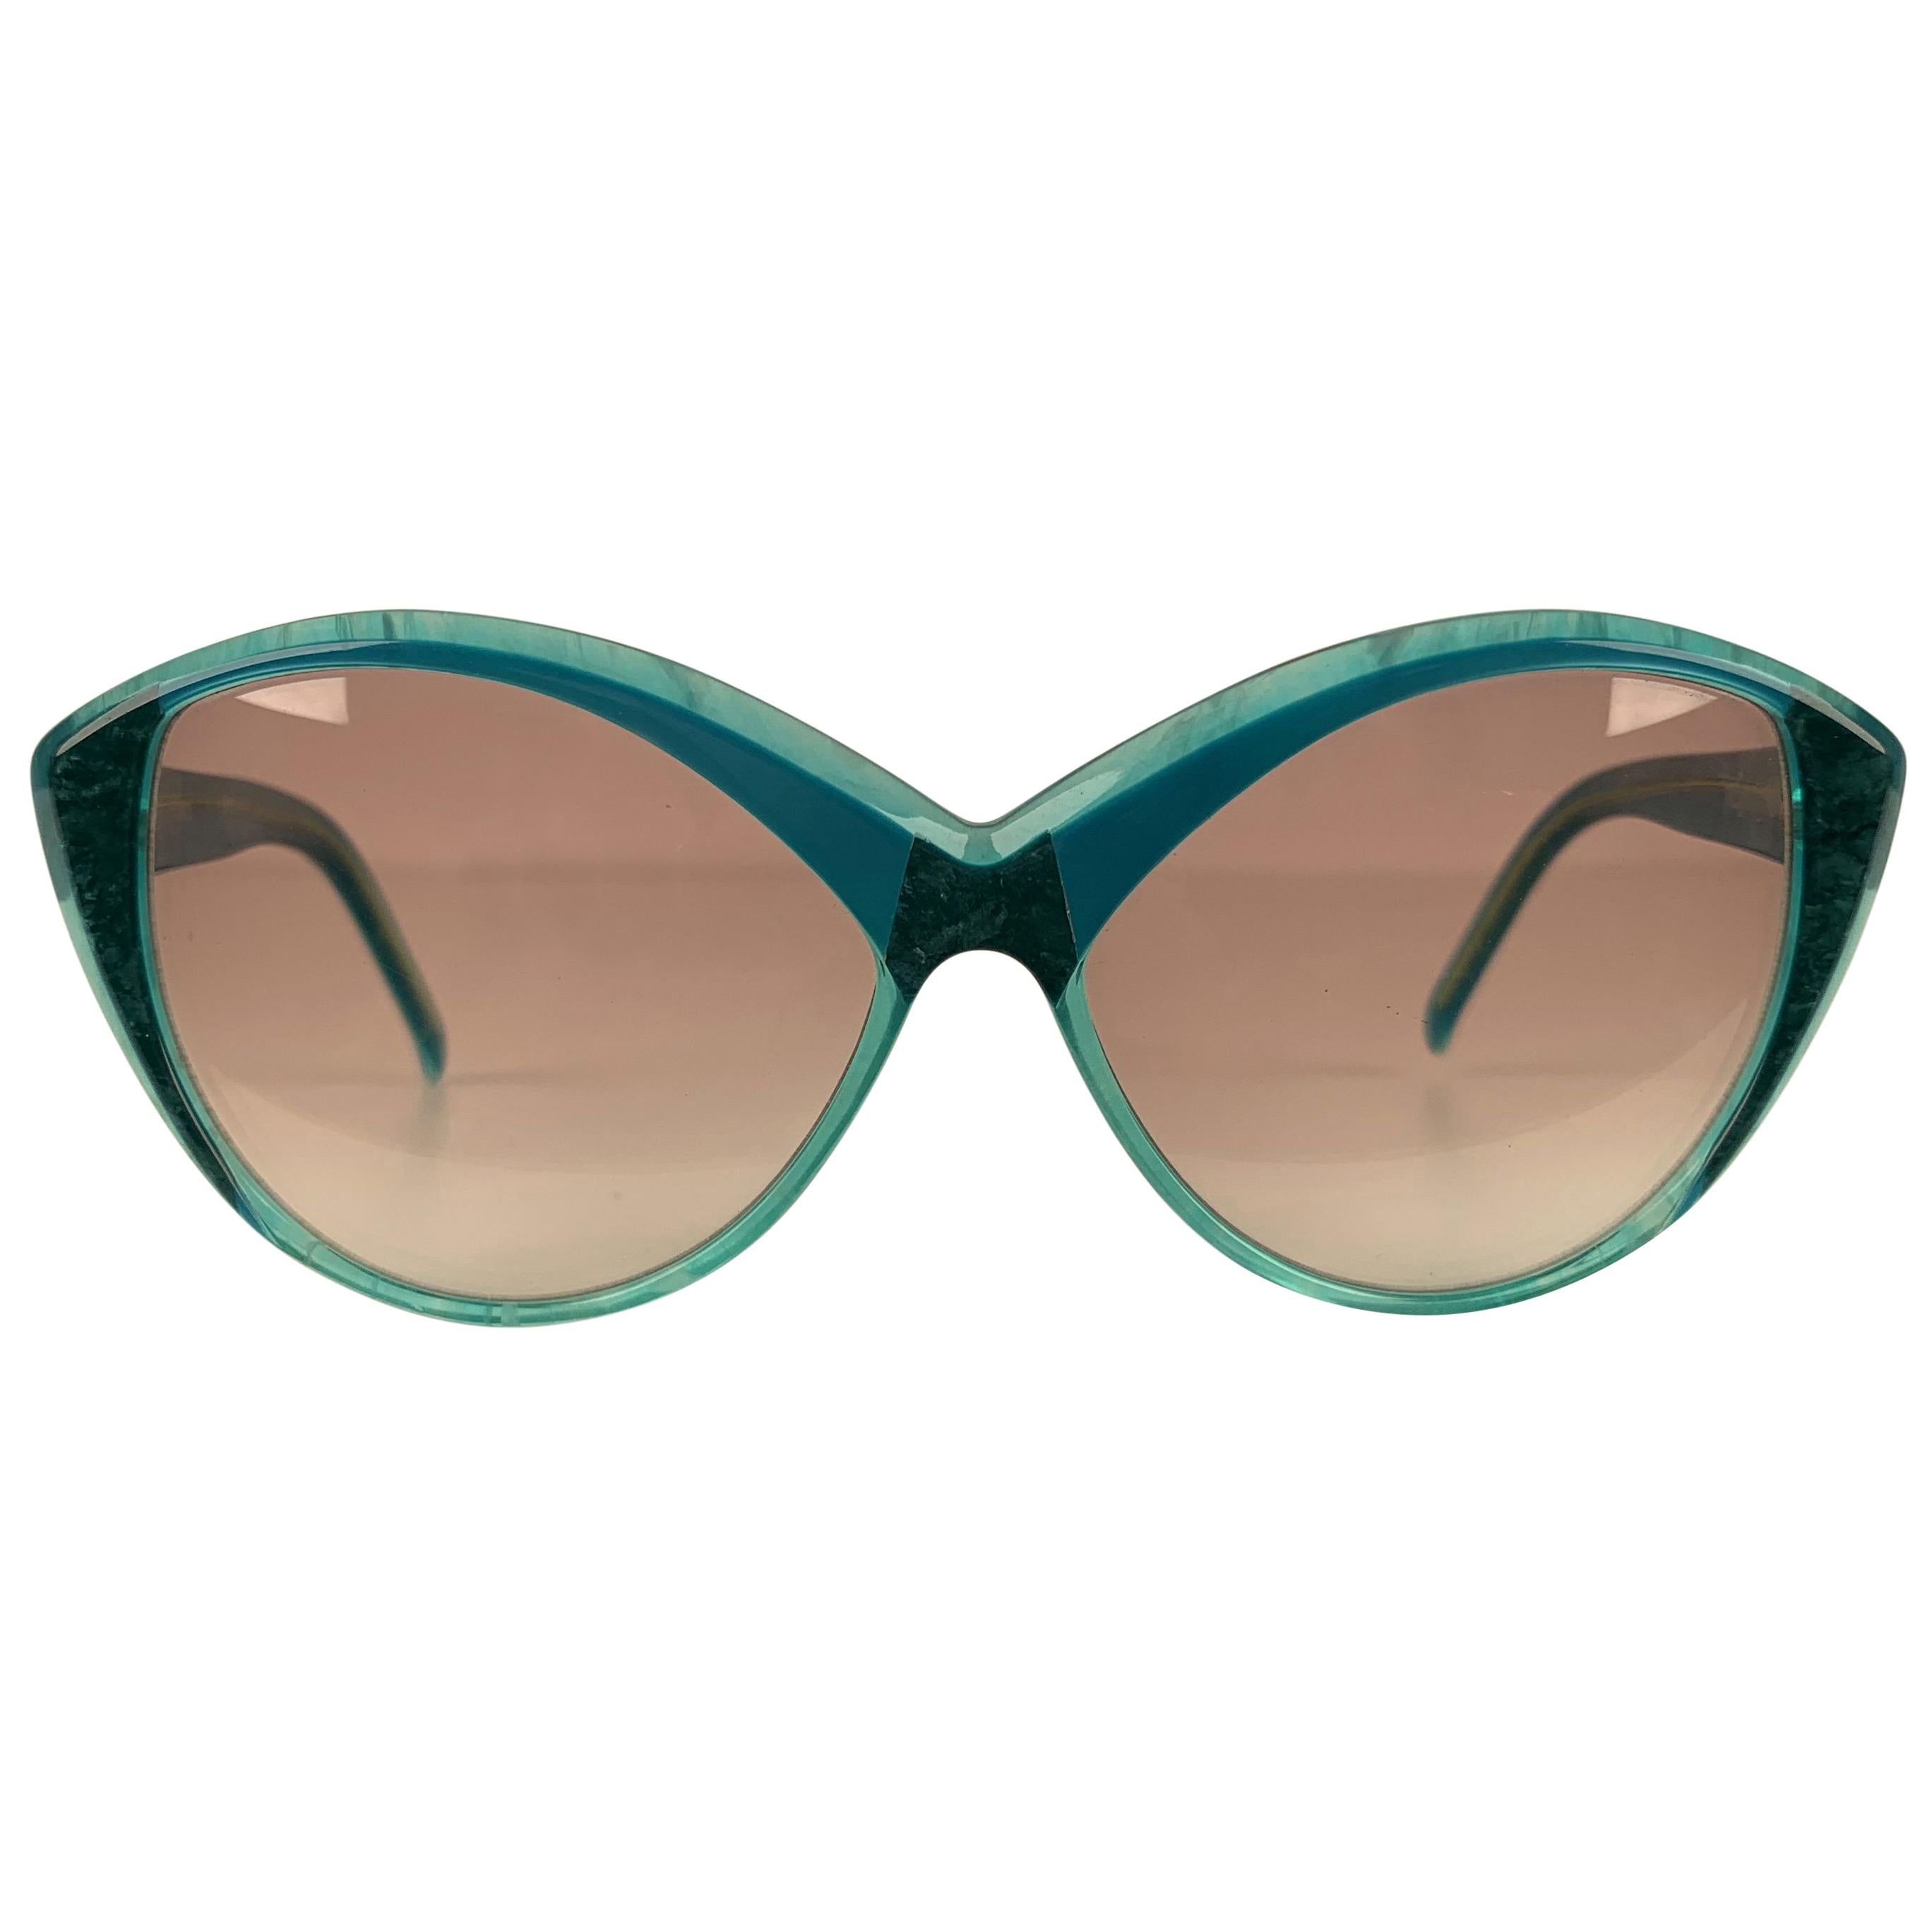 Yves Saint Laurent Vintage Cat Eye Turquoise Sunglasses 8702 P 71